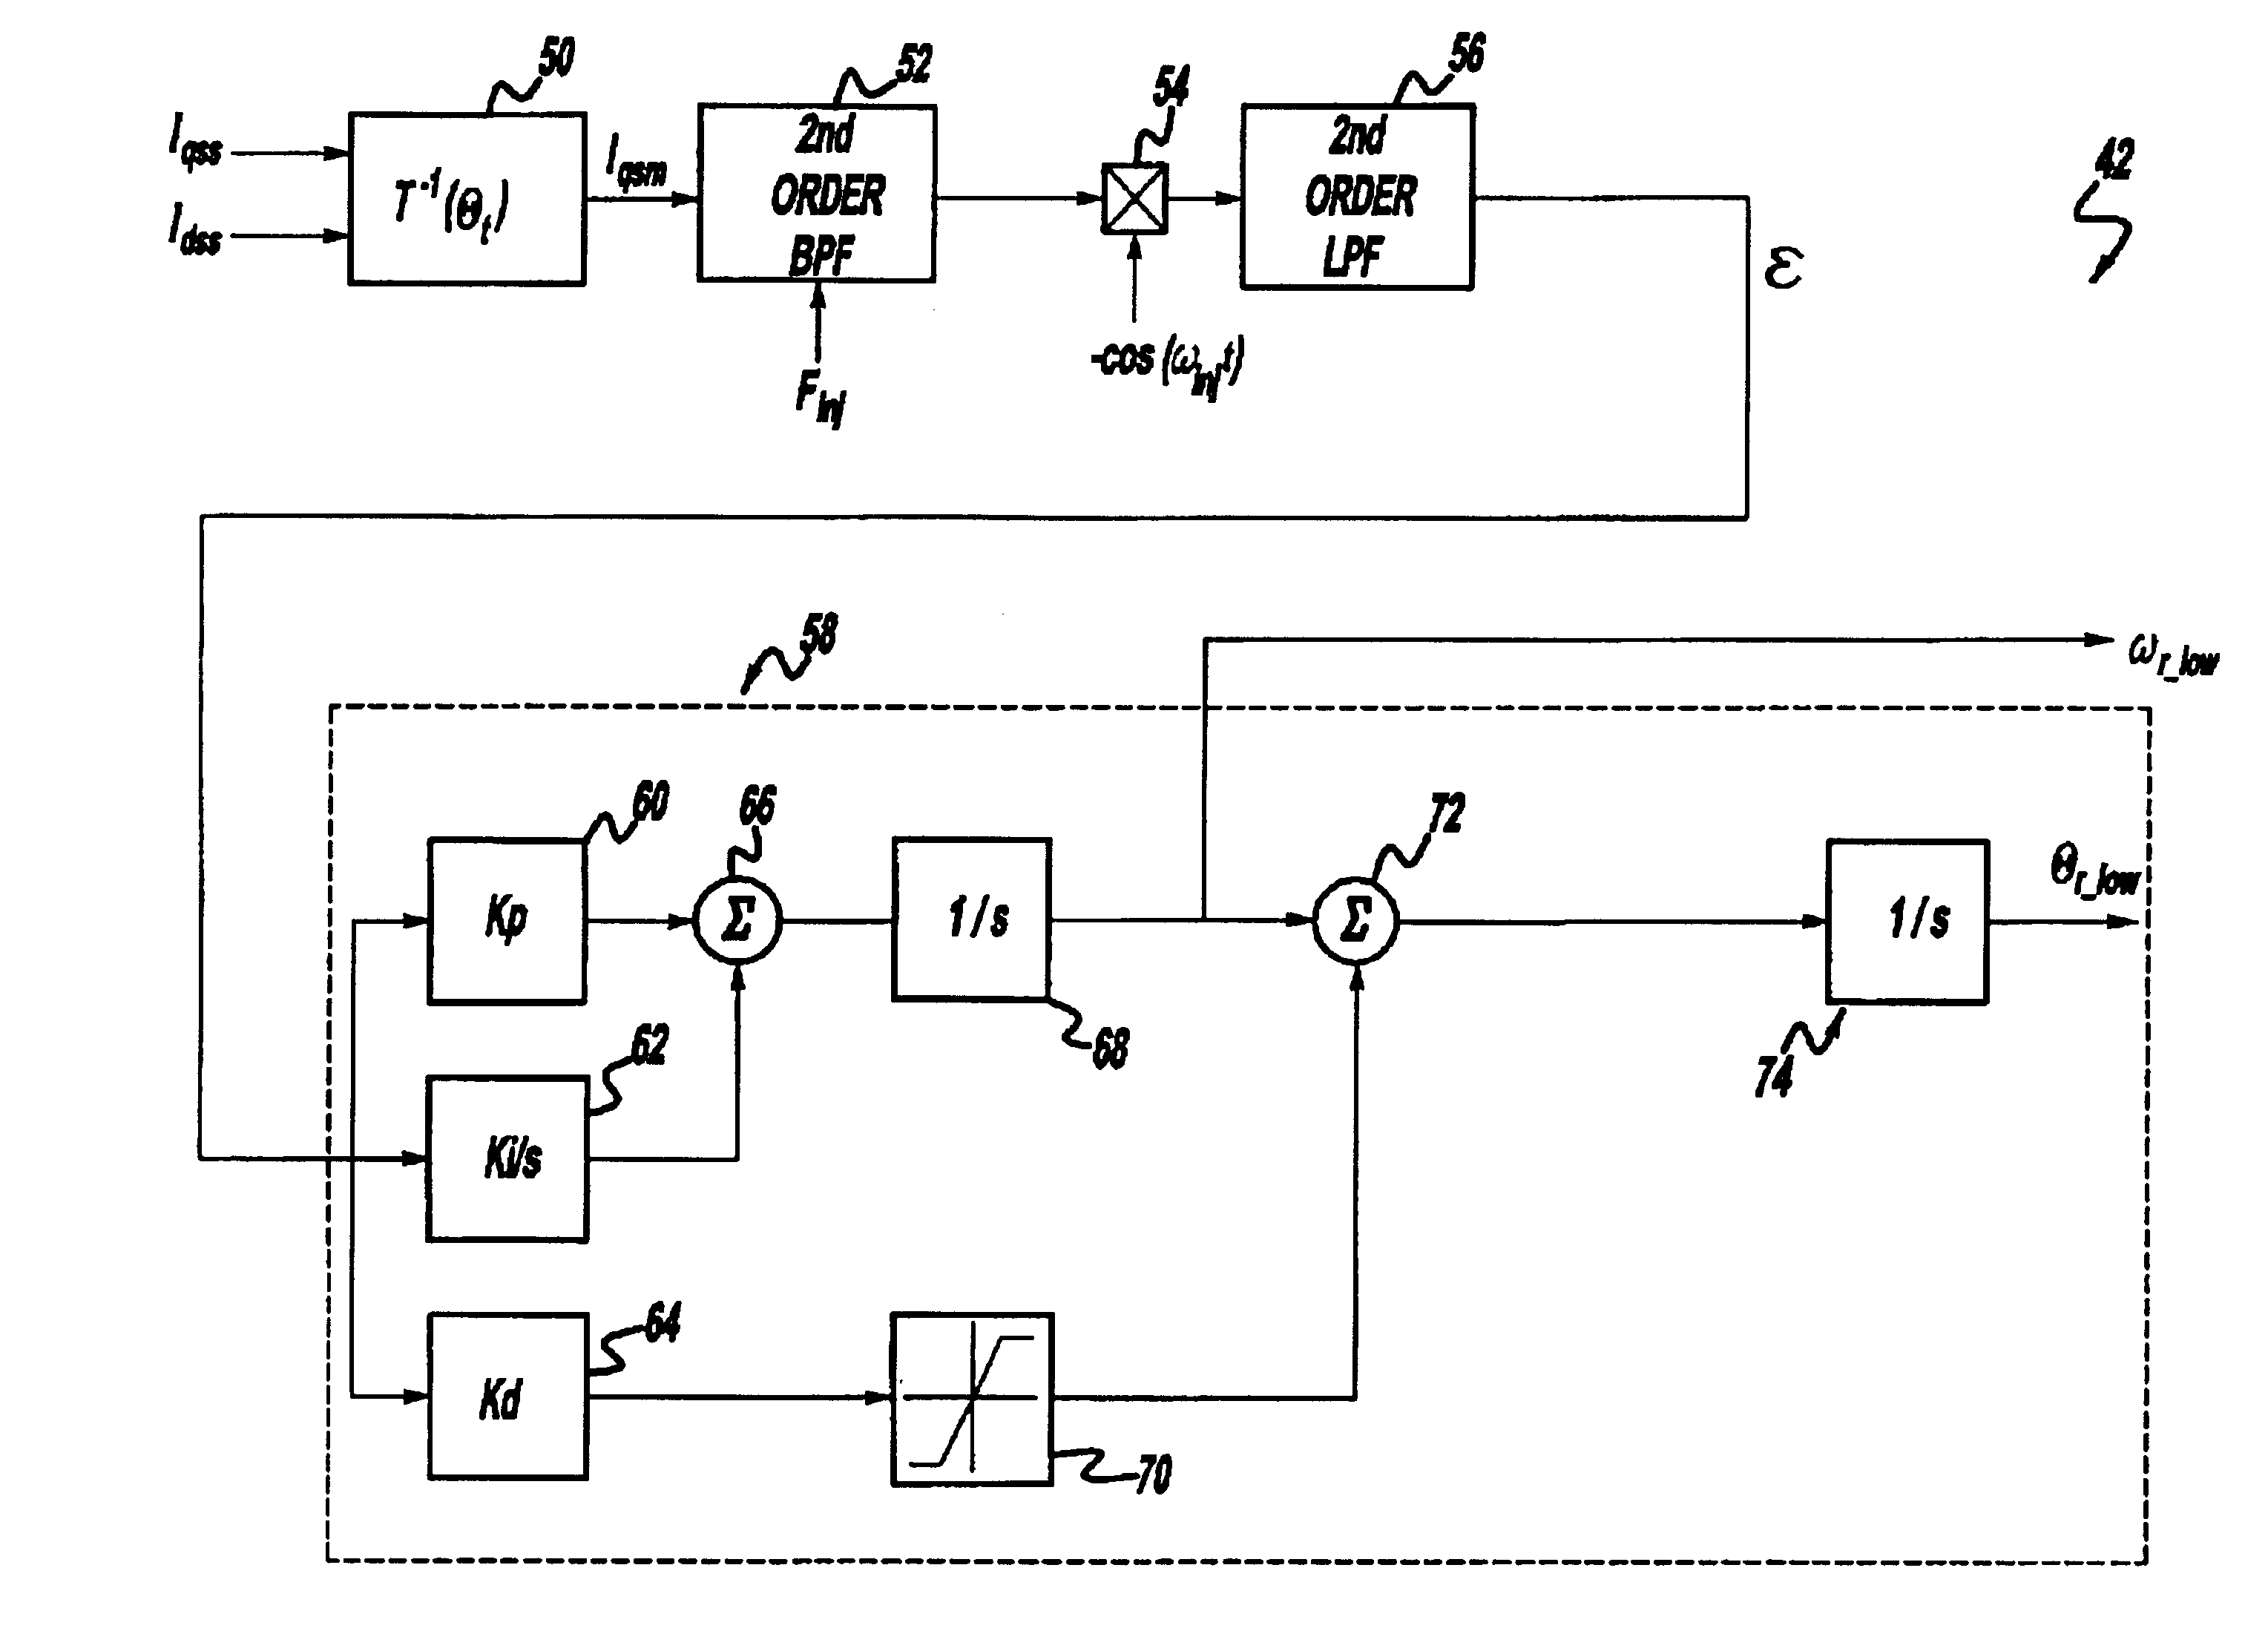 Position sensorless control algorithm for AC machine